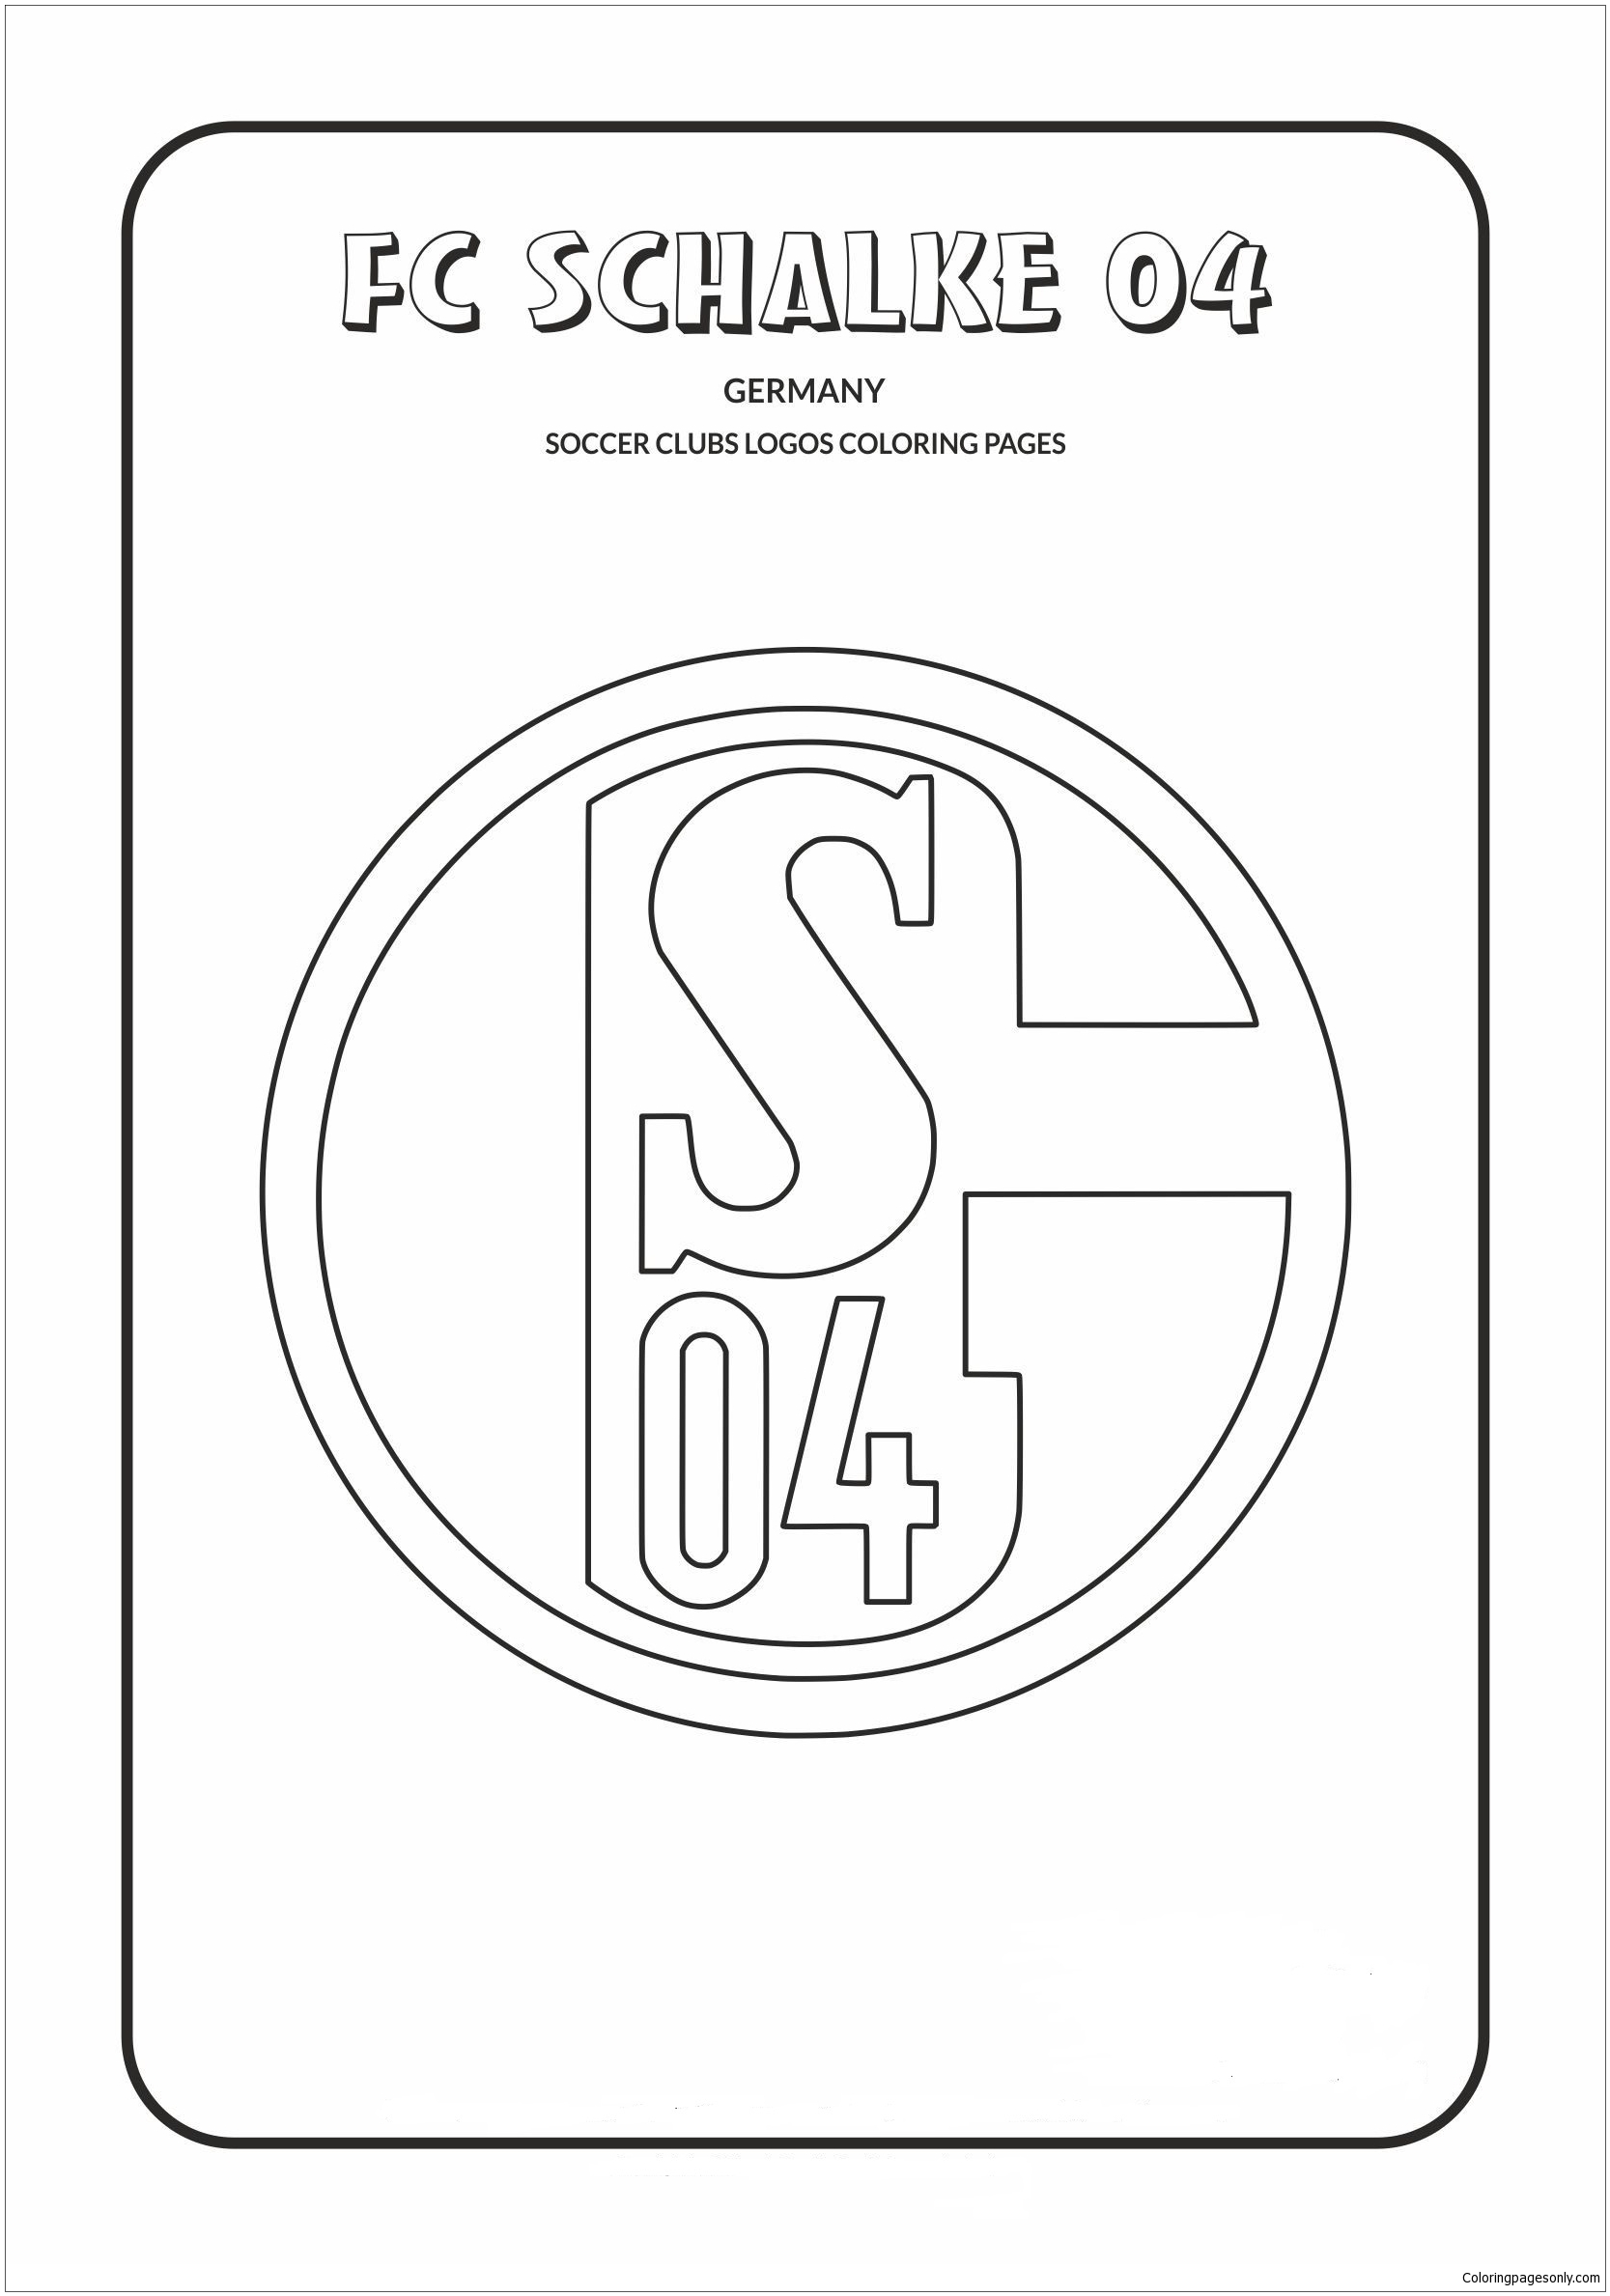 FC Schalke 04 des logos de l'équipe de Bundesliga allemande